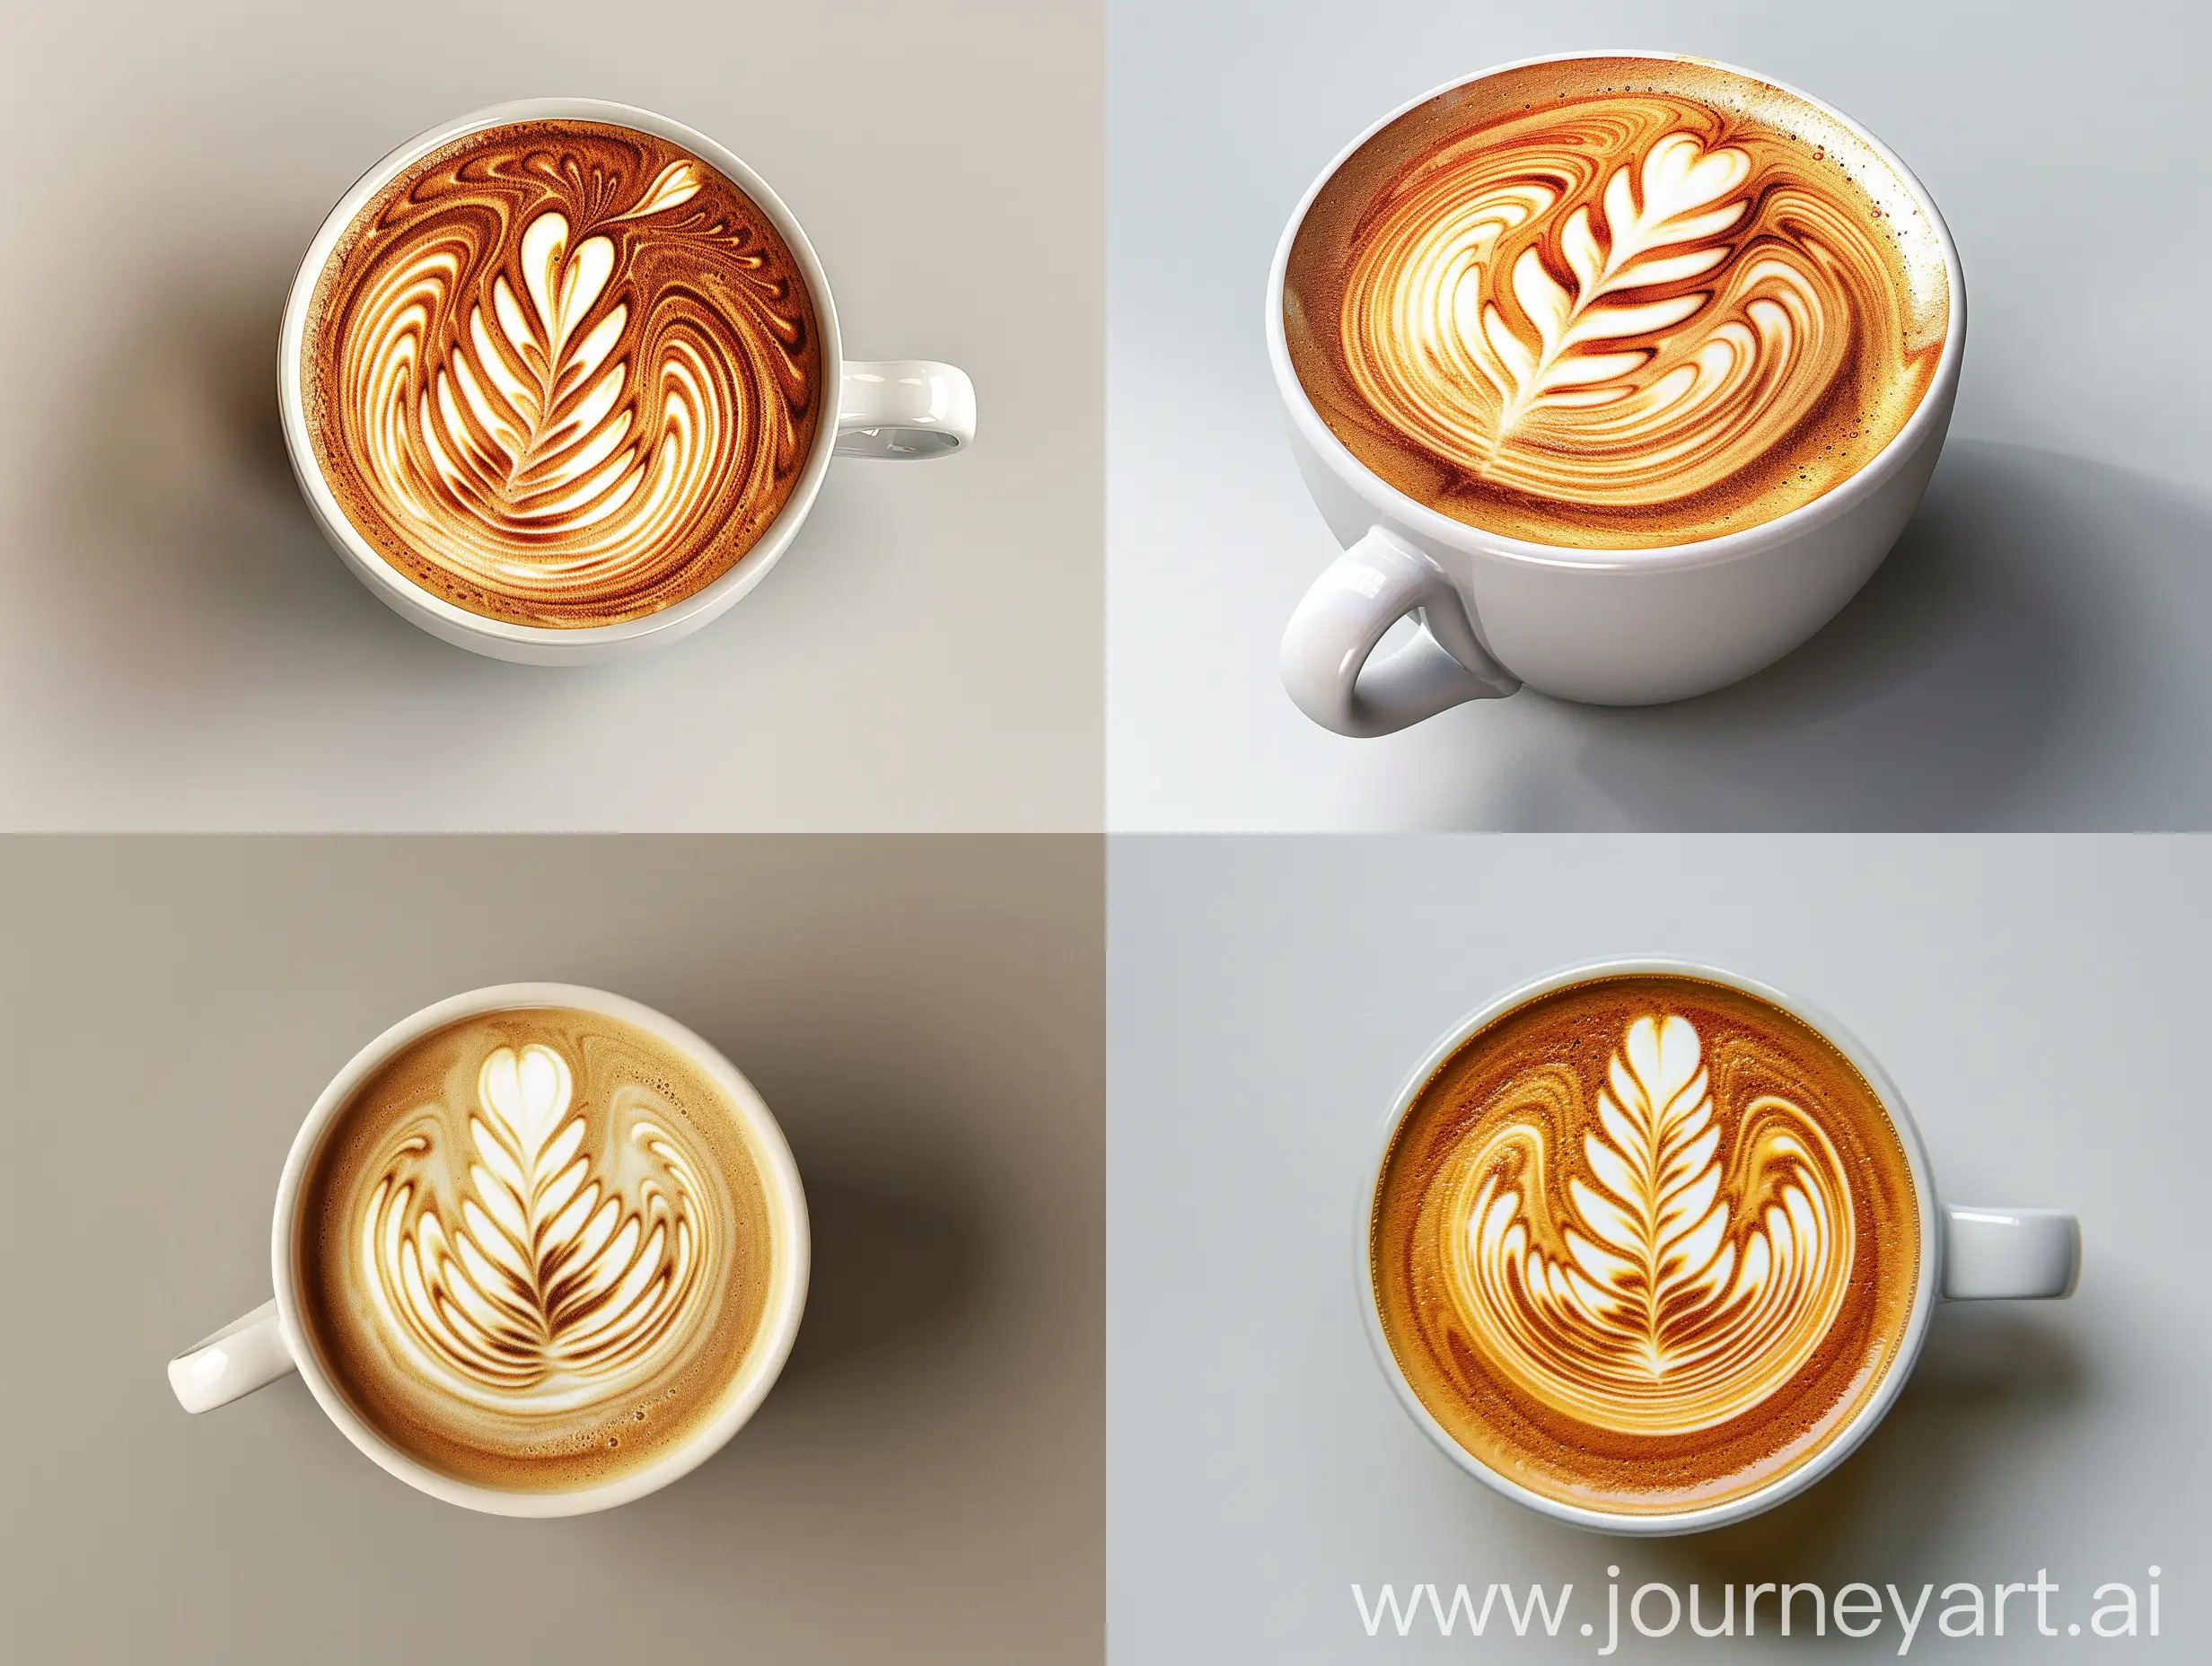 Professional-Barista-Latte-Art-Intricate-and-Graceful-Coffee-Cup-Design